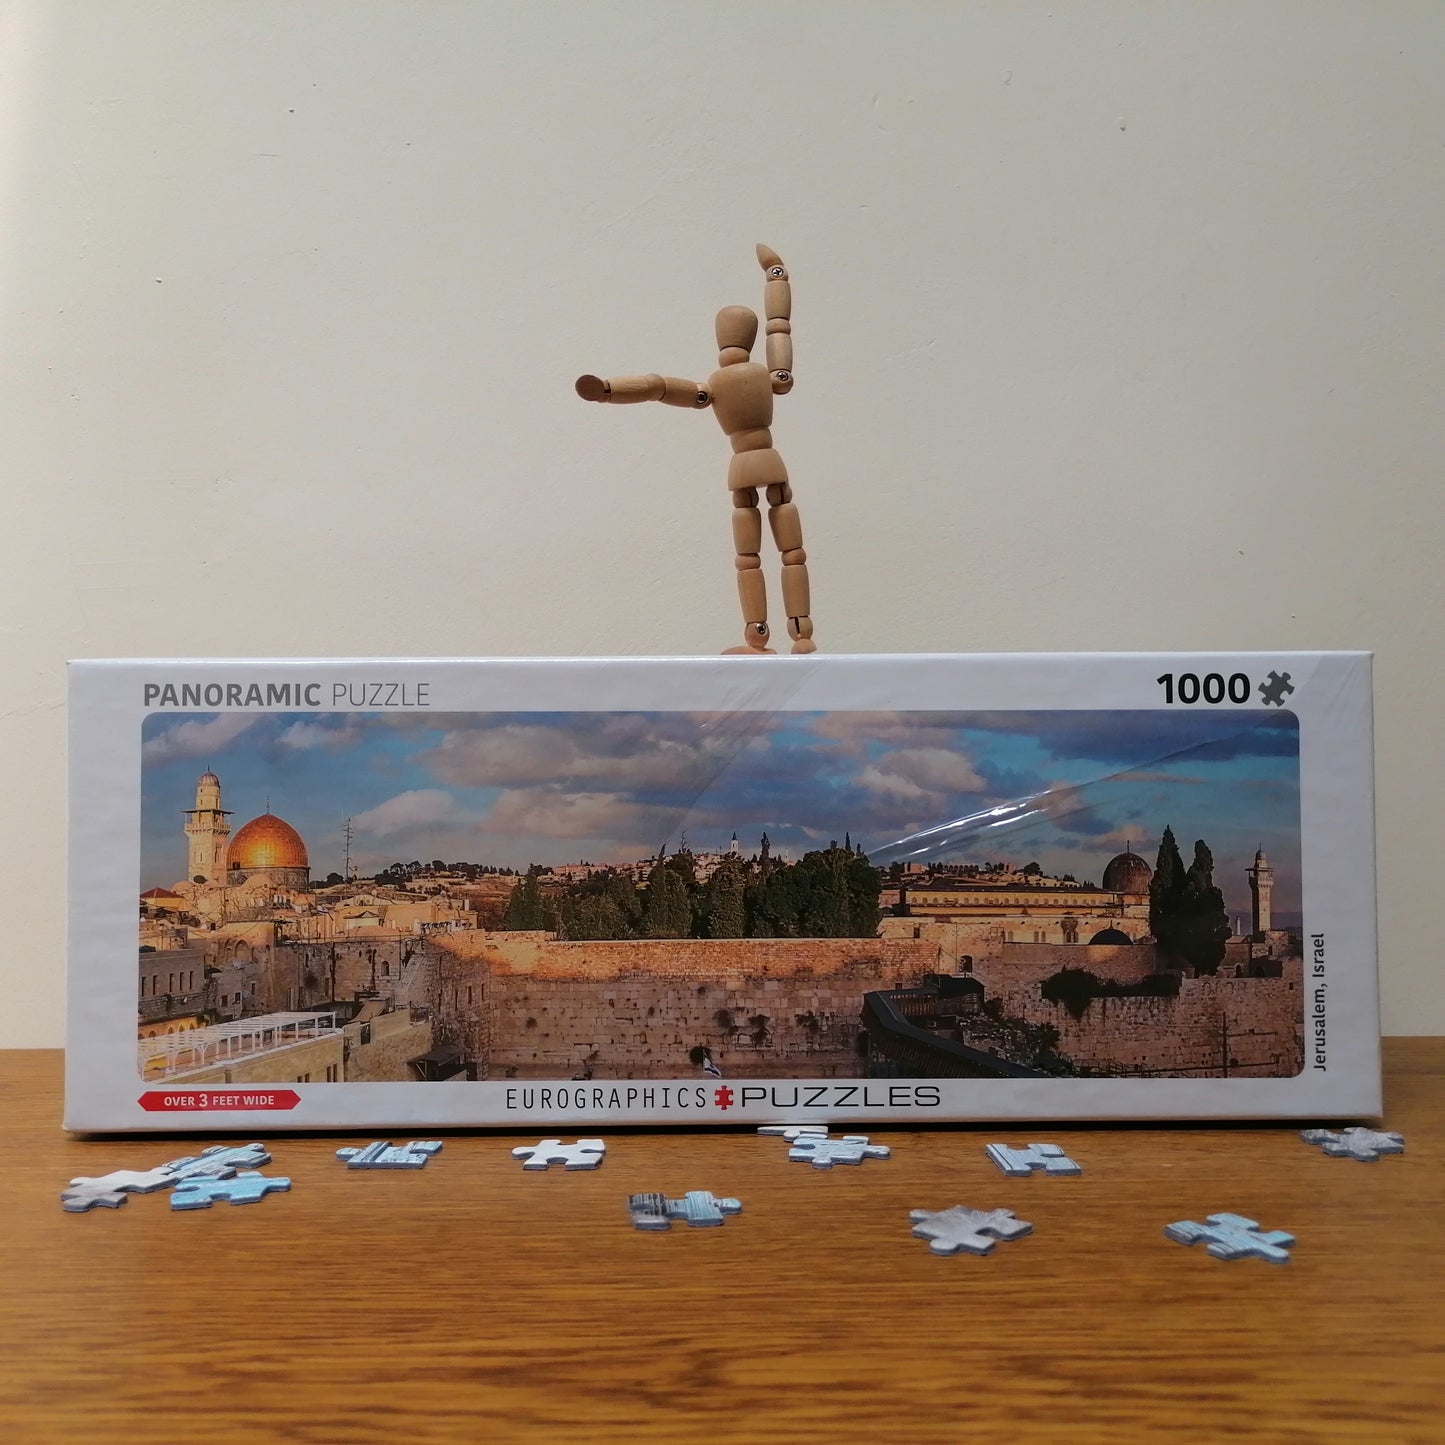 Jerusalem - Israel